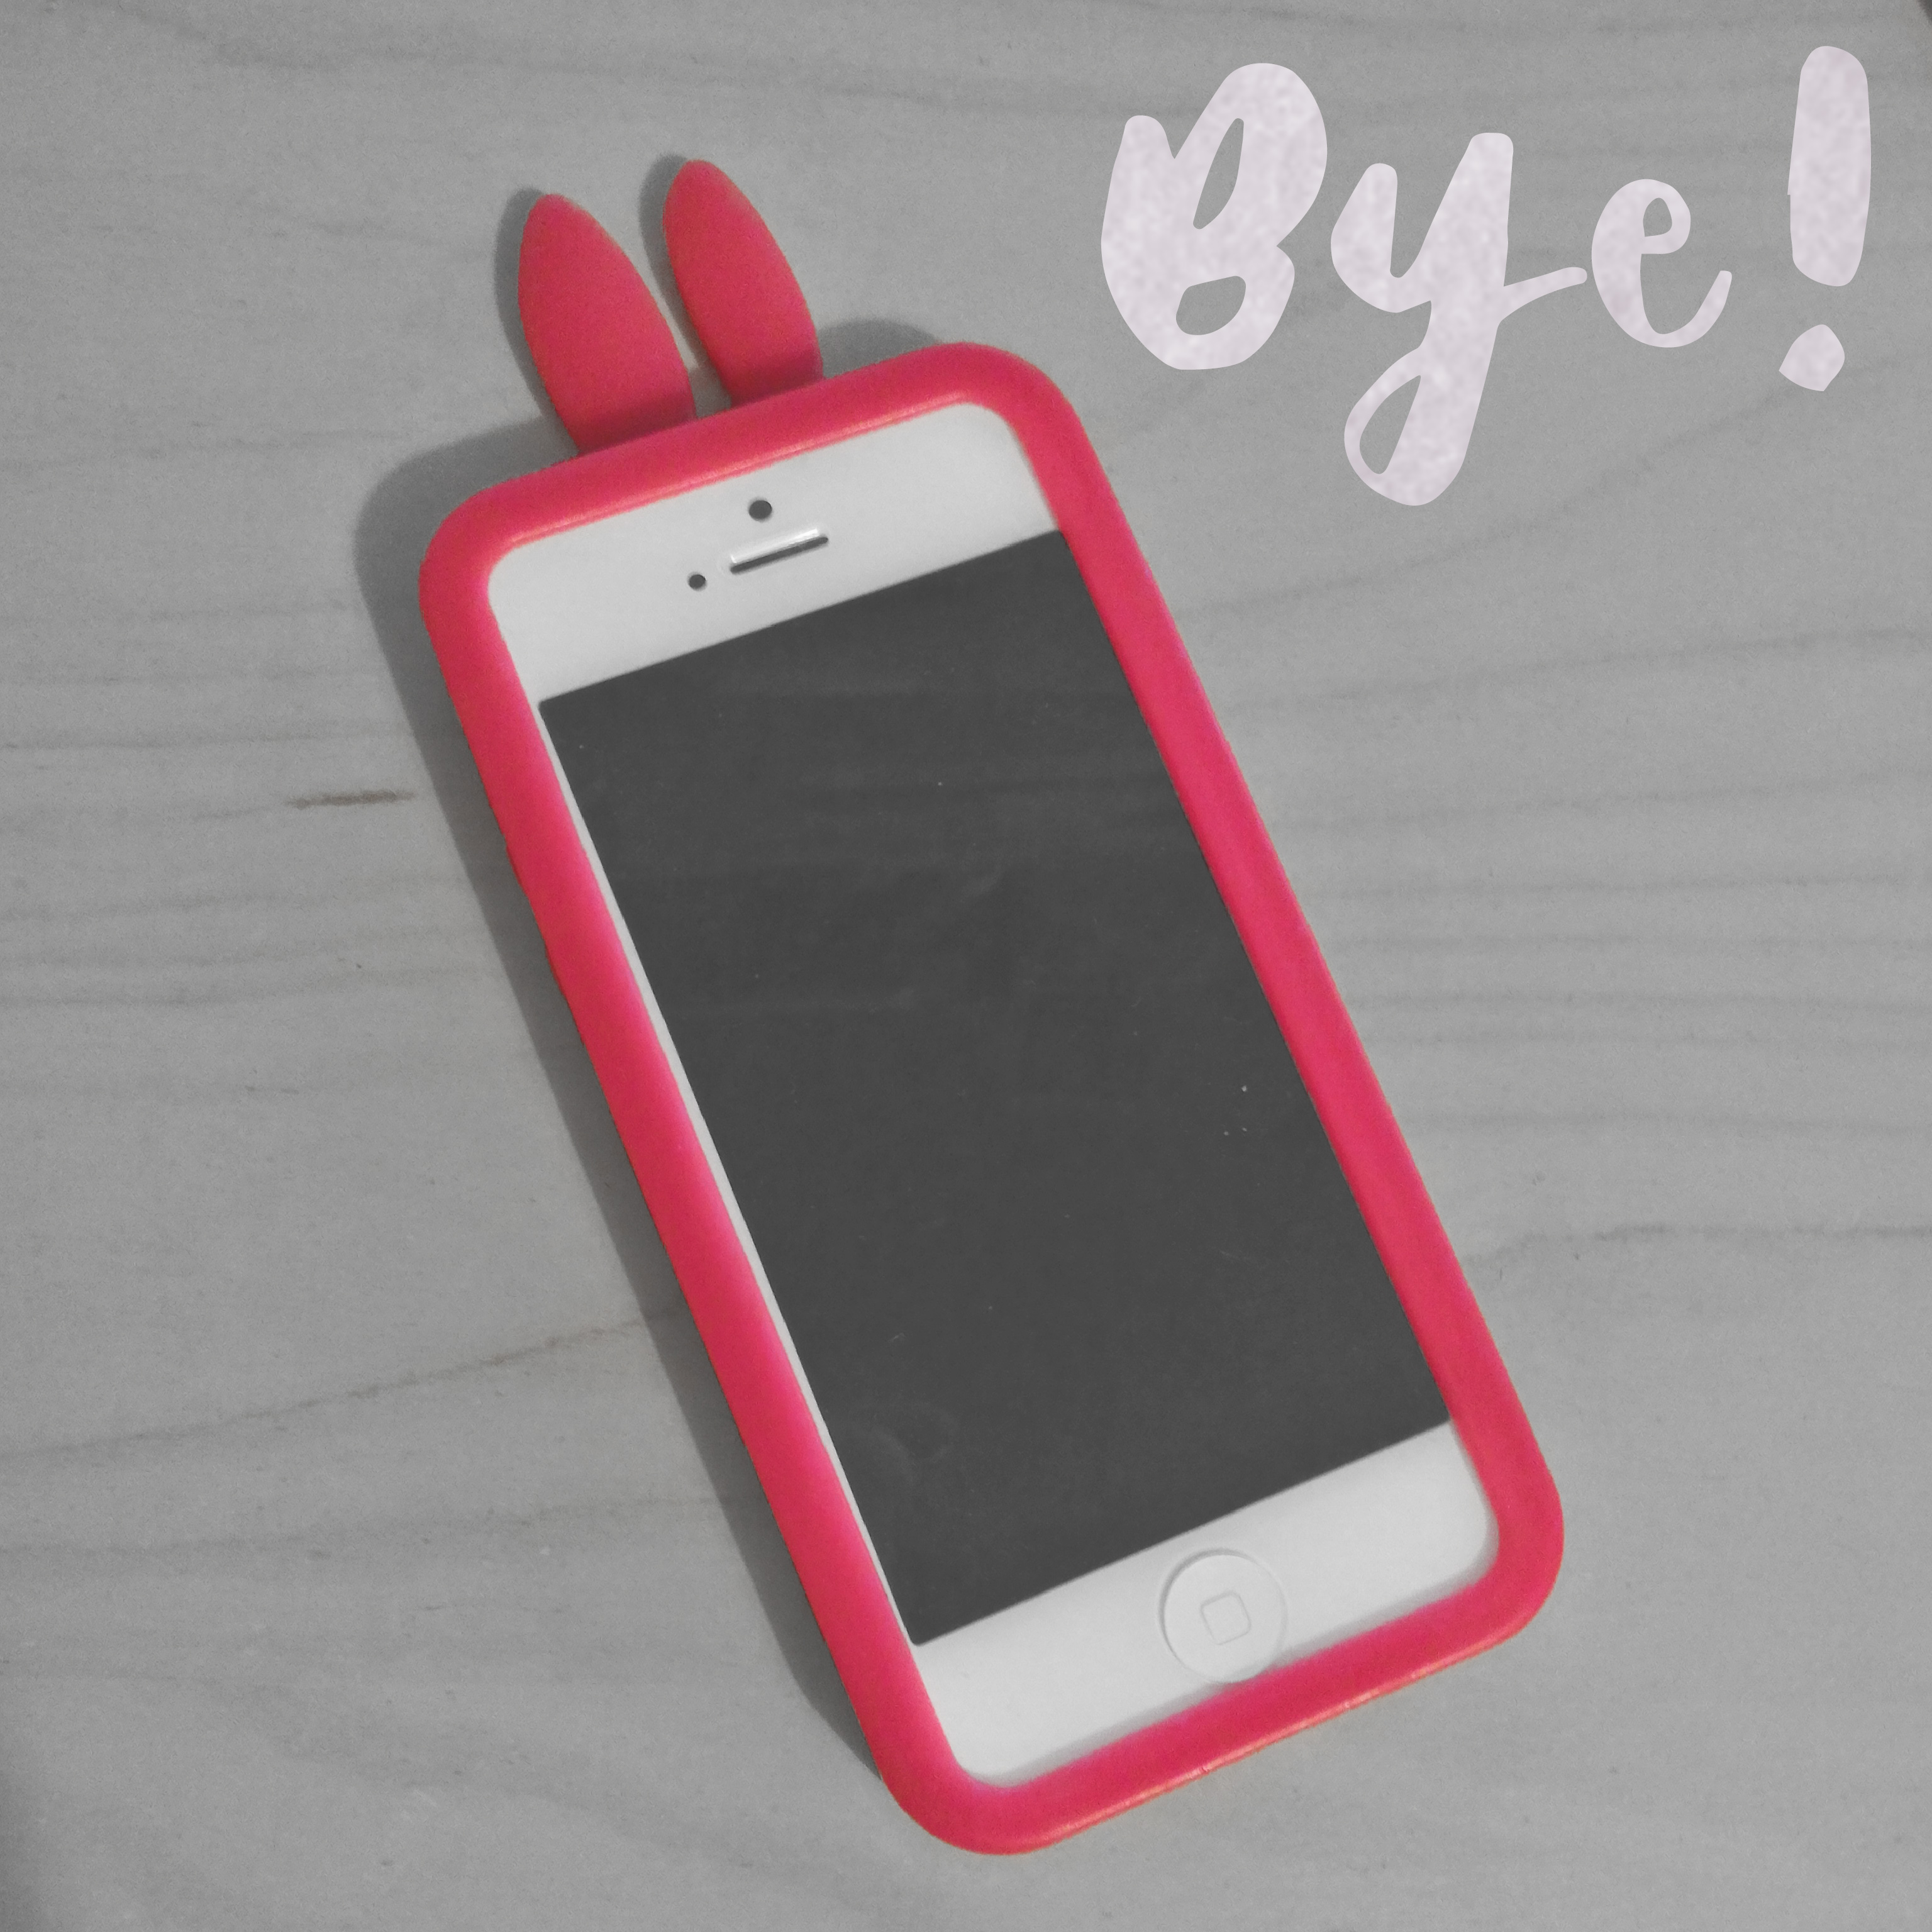 bye-iphone